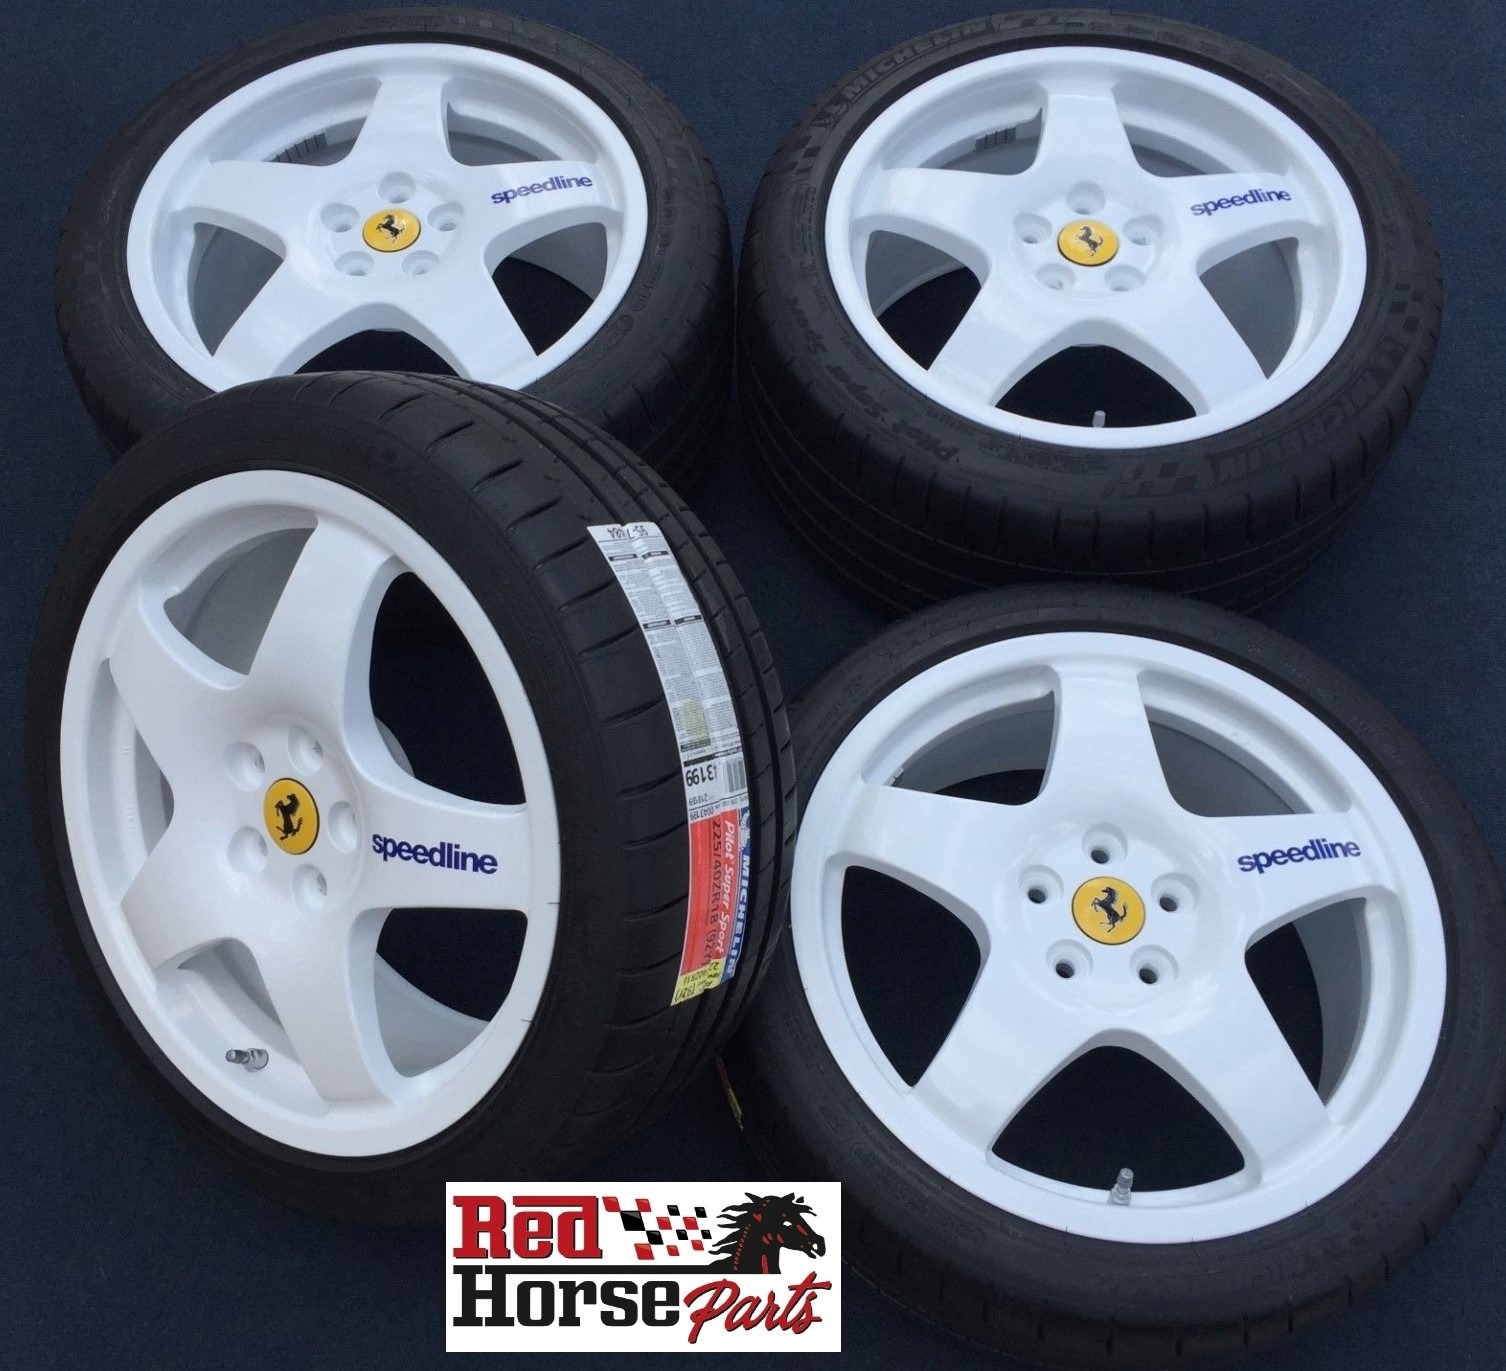 Ferrari 348 challenge wheels